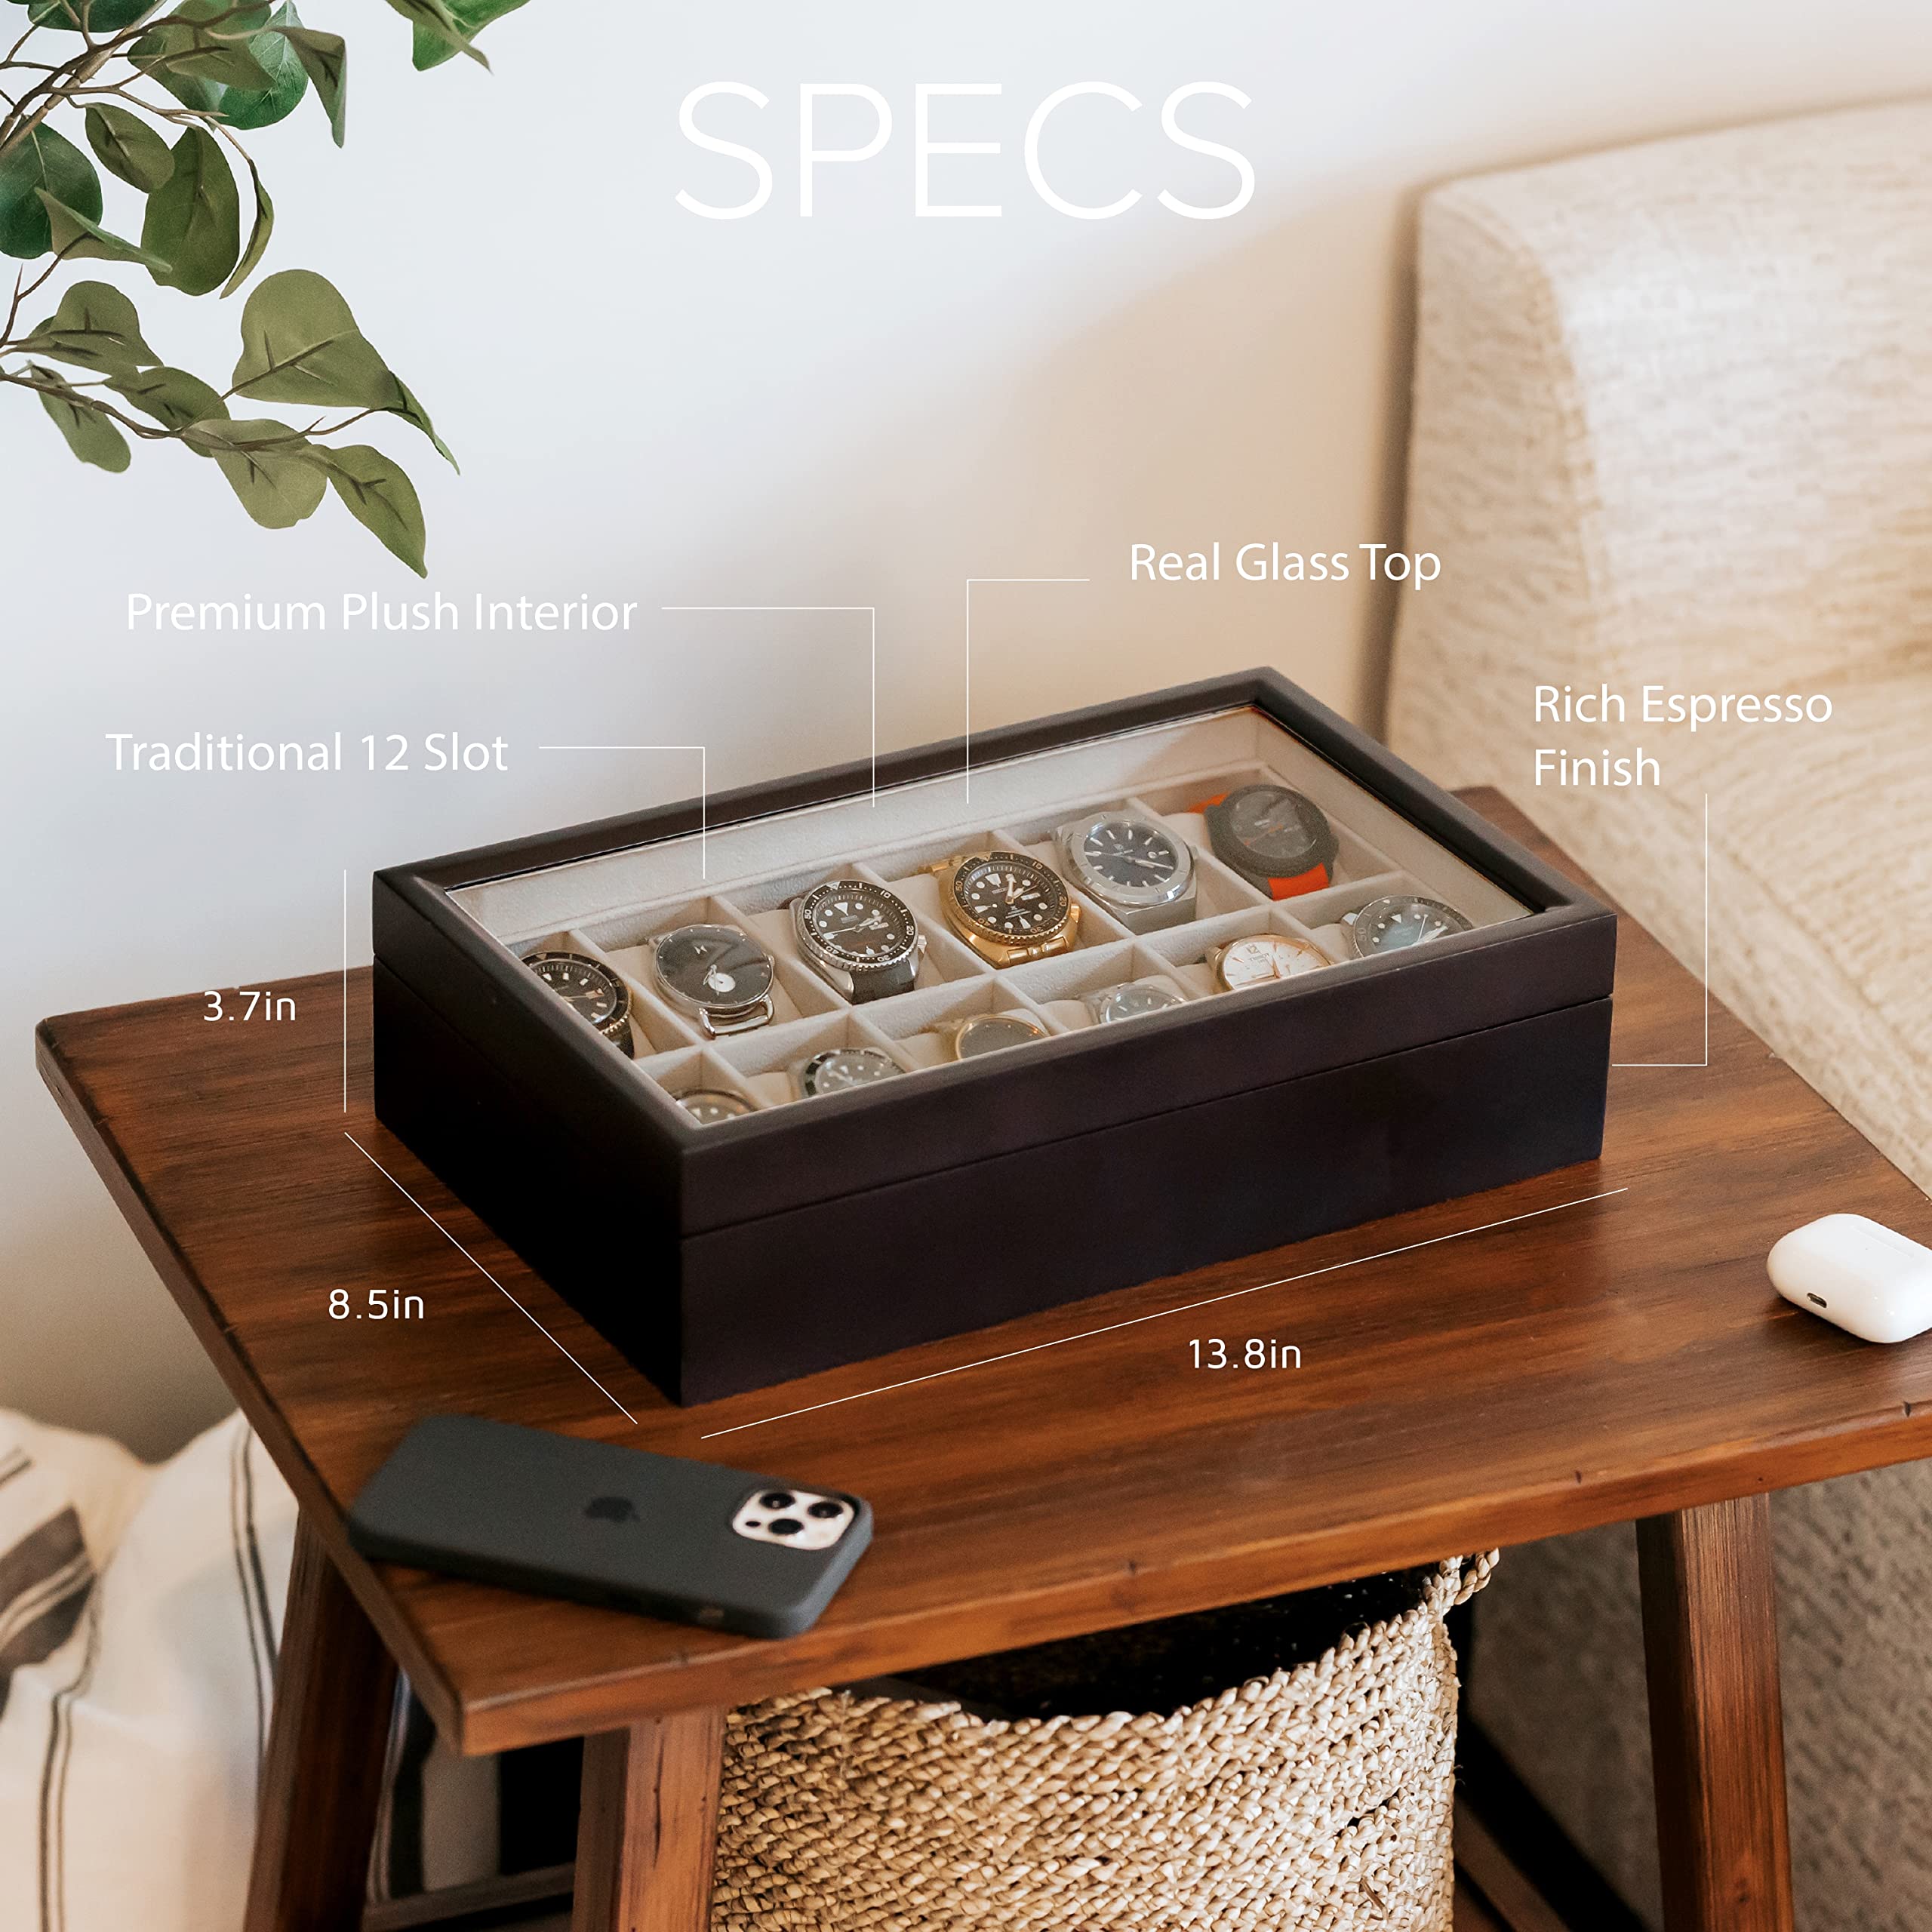 CASE ELEGANCE Solid Espresso Wood Watch Box Organizer with Glass Display Top 12 slot (Espresso)